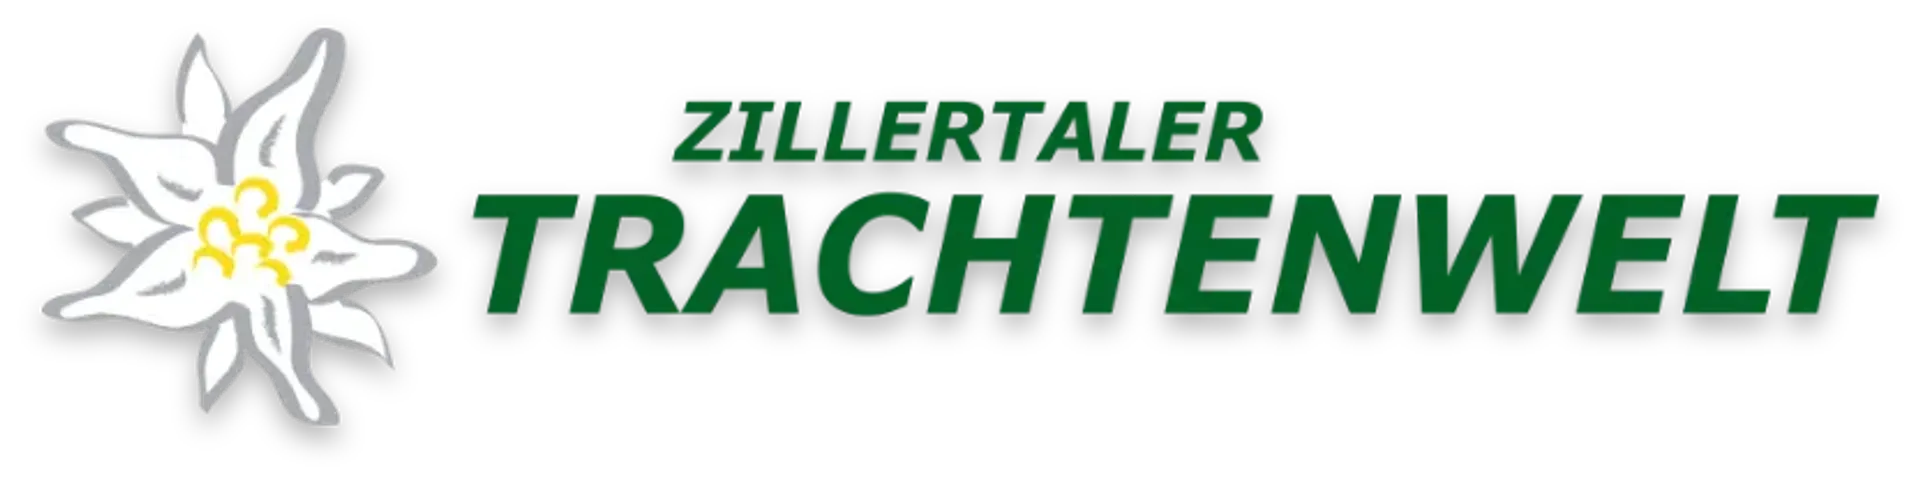 ZILLERTALER TRACHTENWELT logo die aktuell Flugblatt